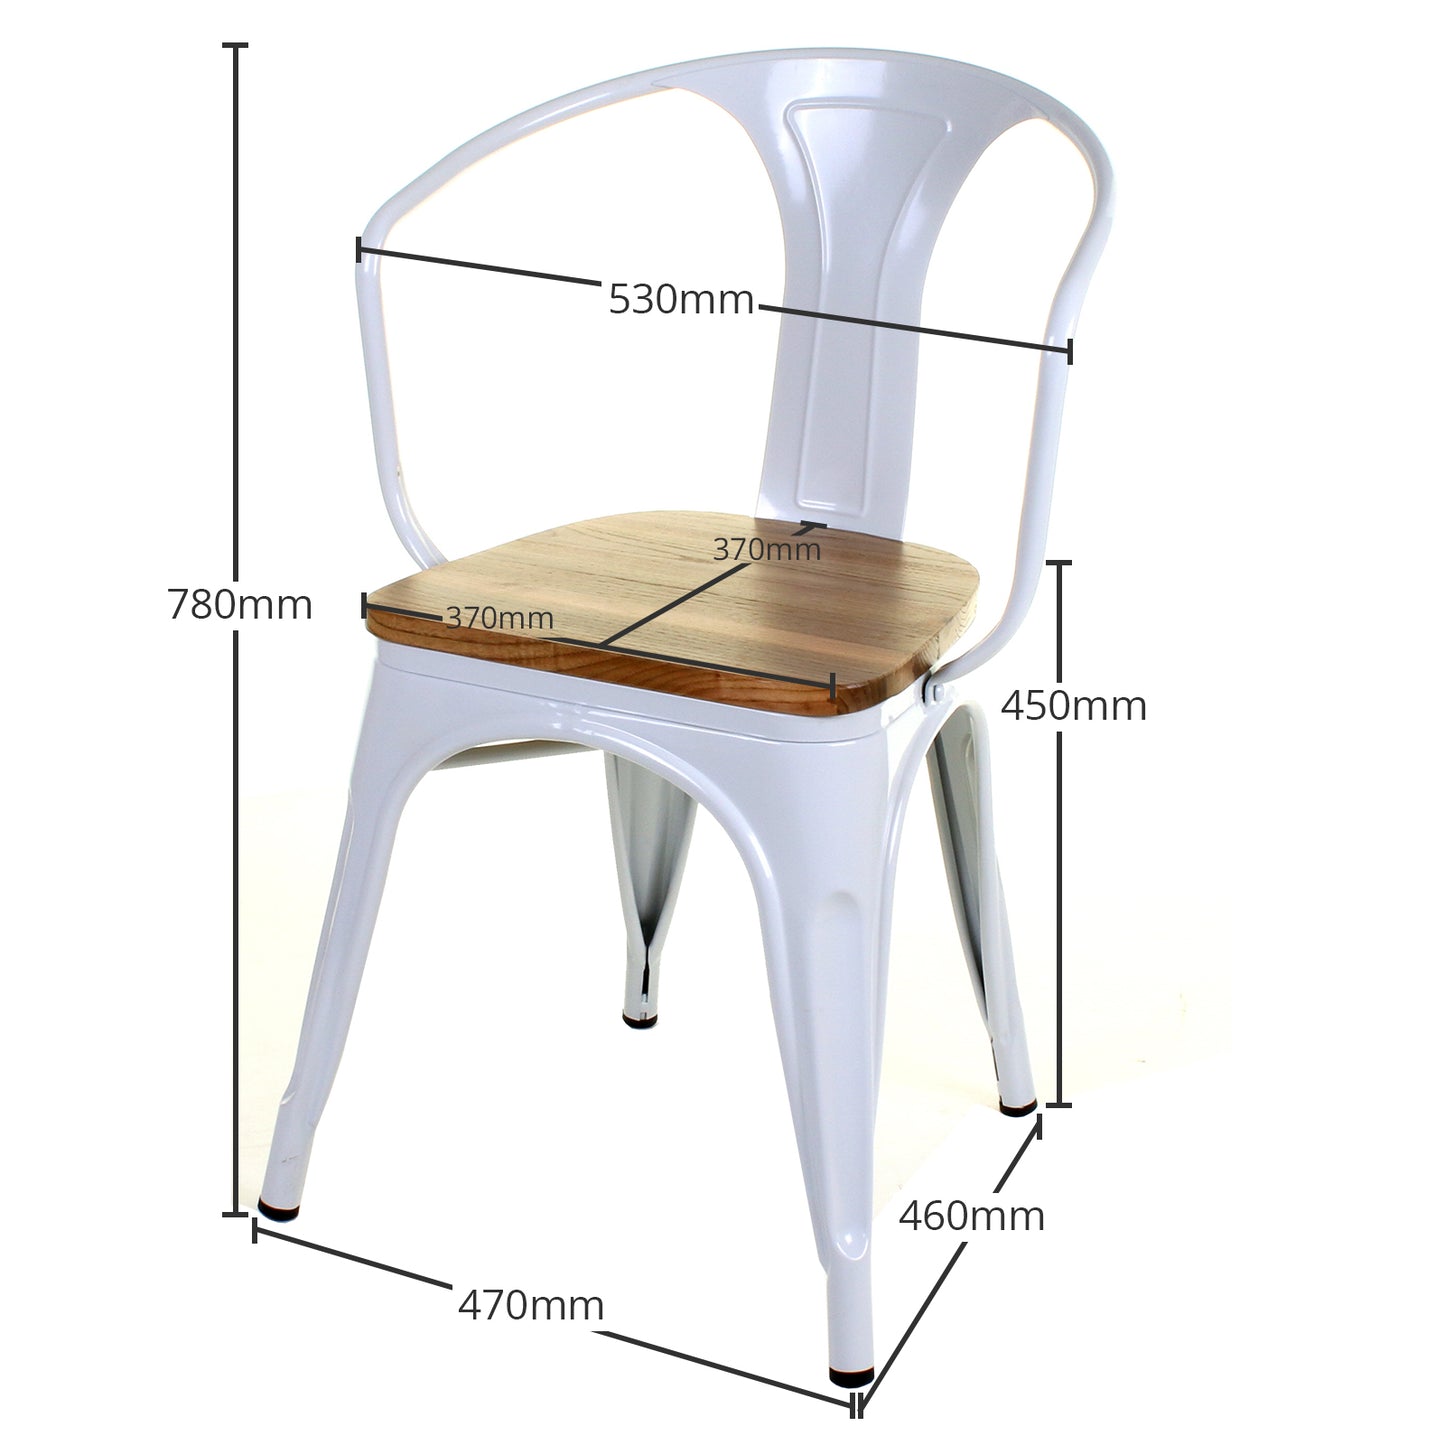 3PC Enna Table & Florence Chair Set - White